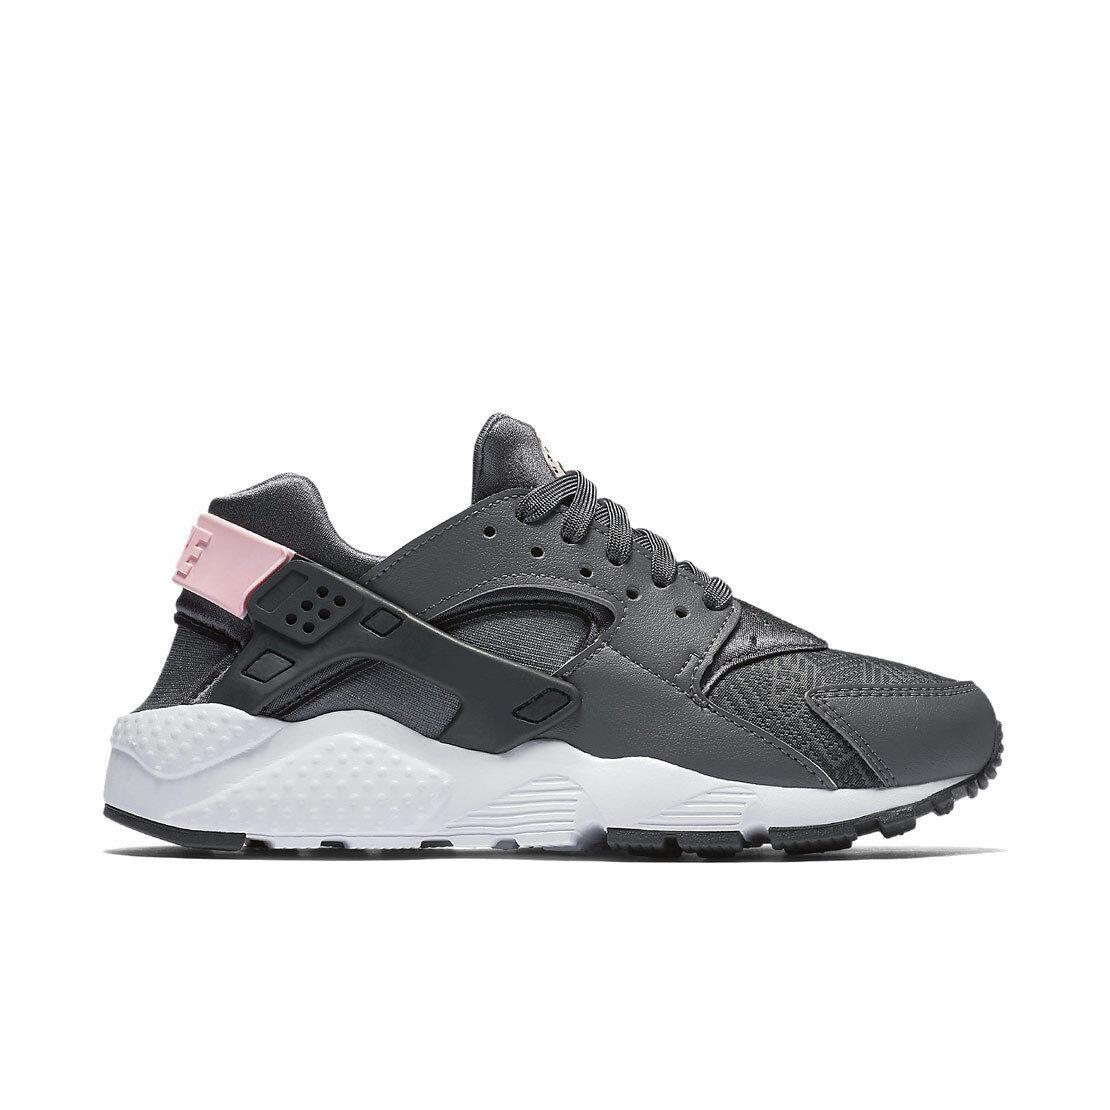 Grade School Youth Size Nike Huarache Run SE Dark Grey Athletic 904538 001 - Dark Grey/Pink/White